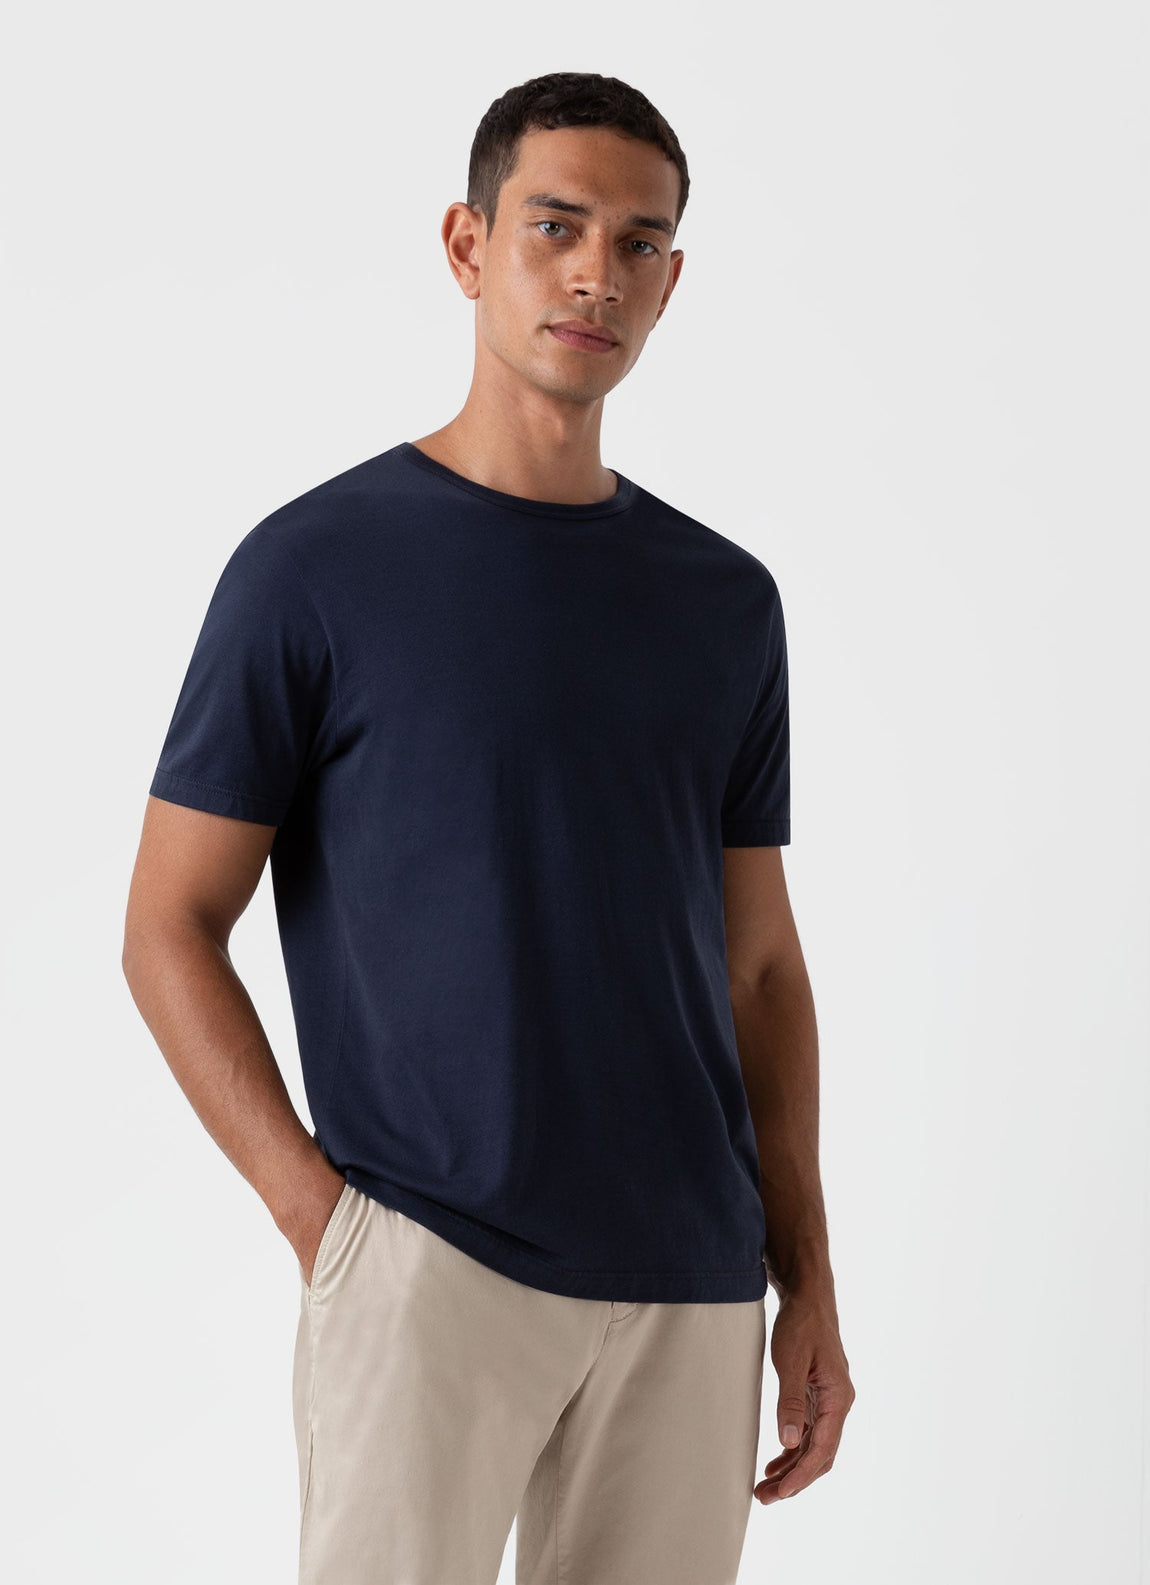 Men's Classic T-shirt in Navy | Sunspel